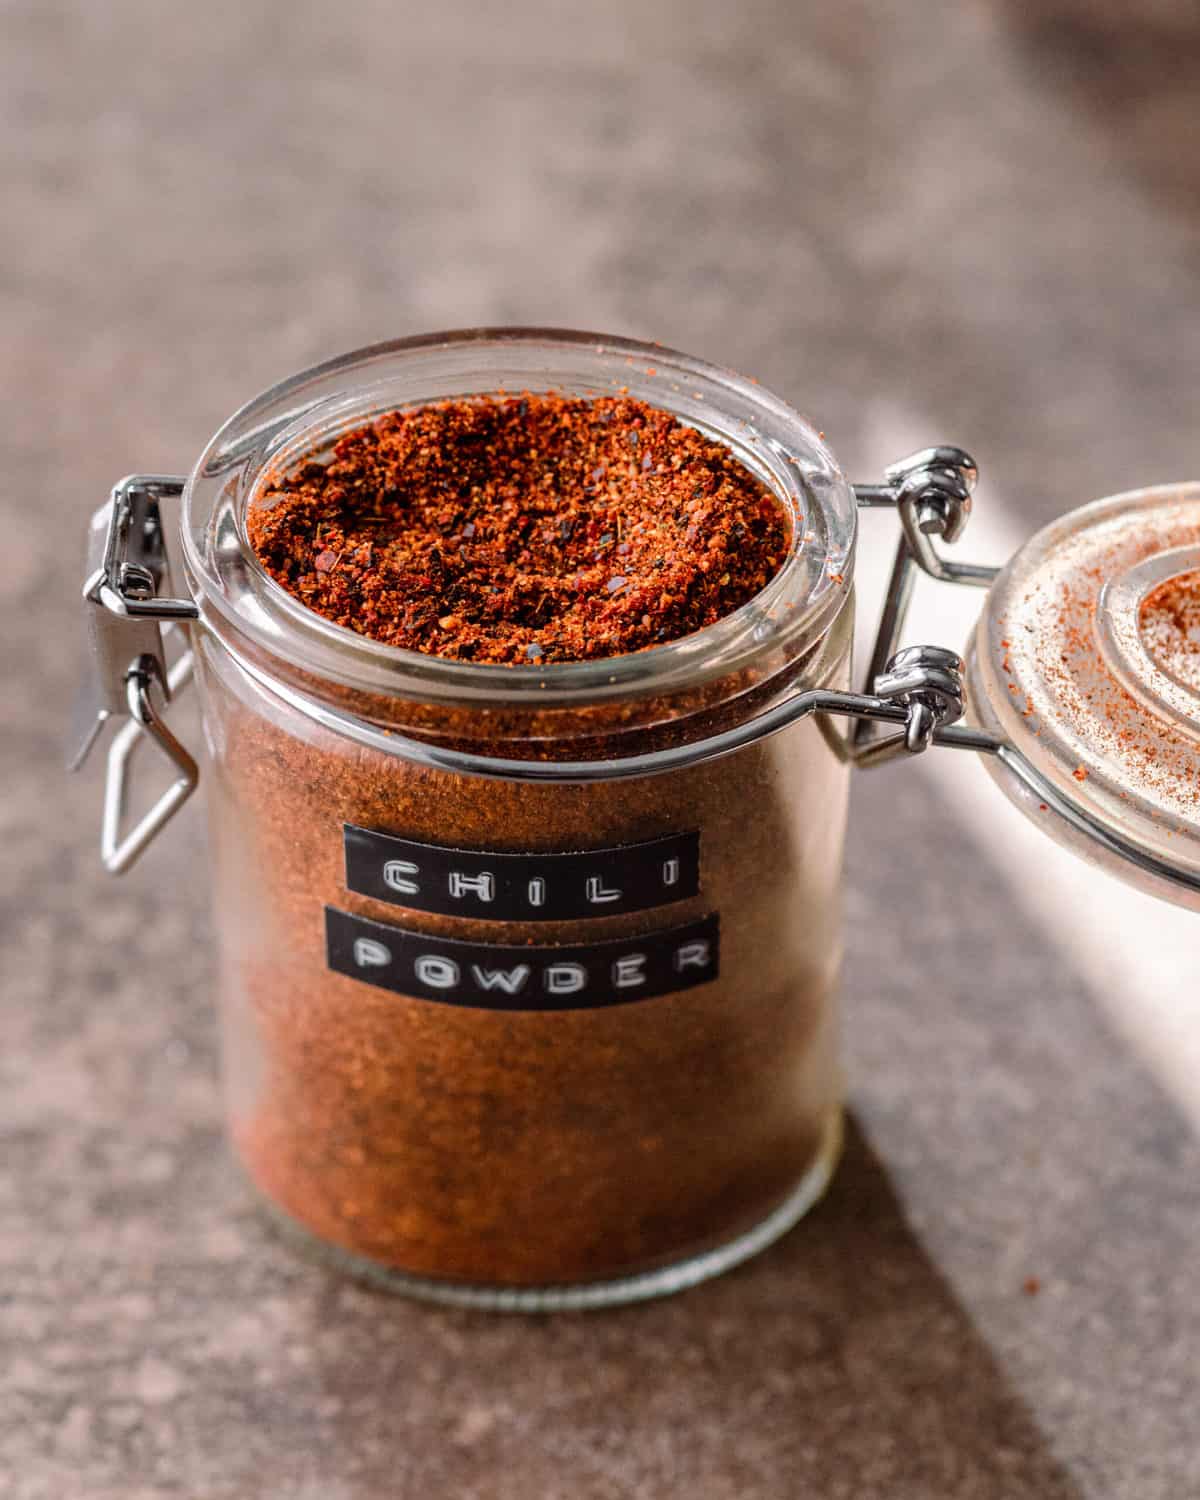 homemade chili powder in a glass jar